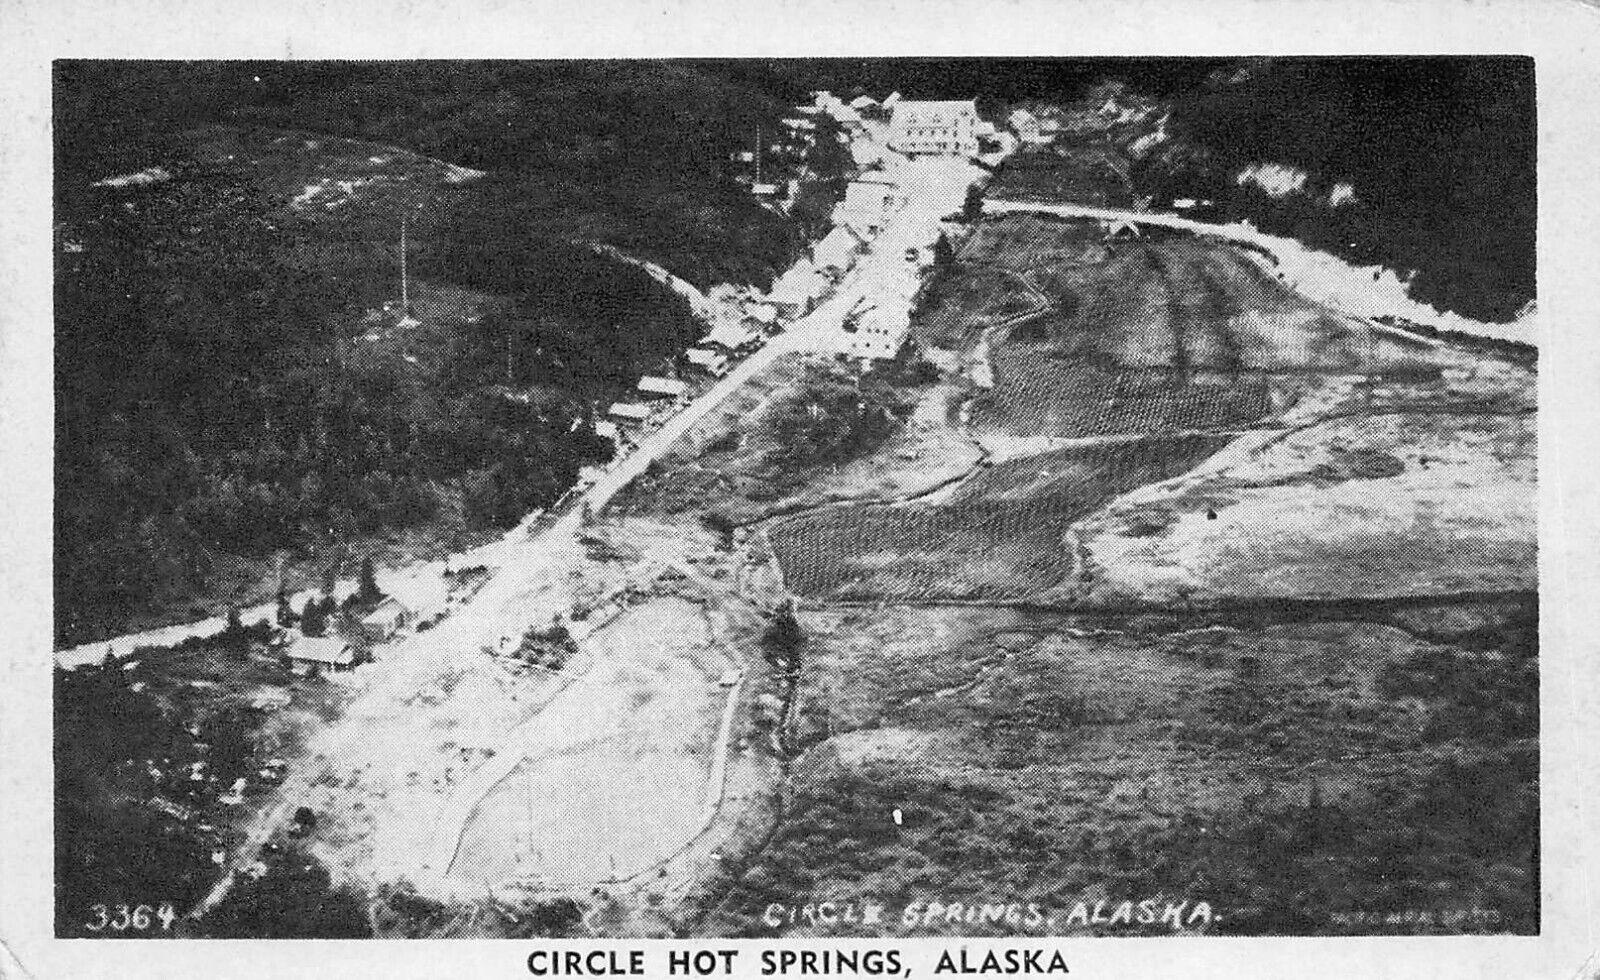 1944 ALASKA PHOTO POSTCARD: AERIAL VIEW OF CIRCLE HOT SPRINGS, AK